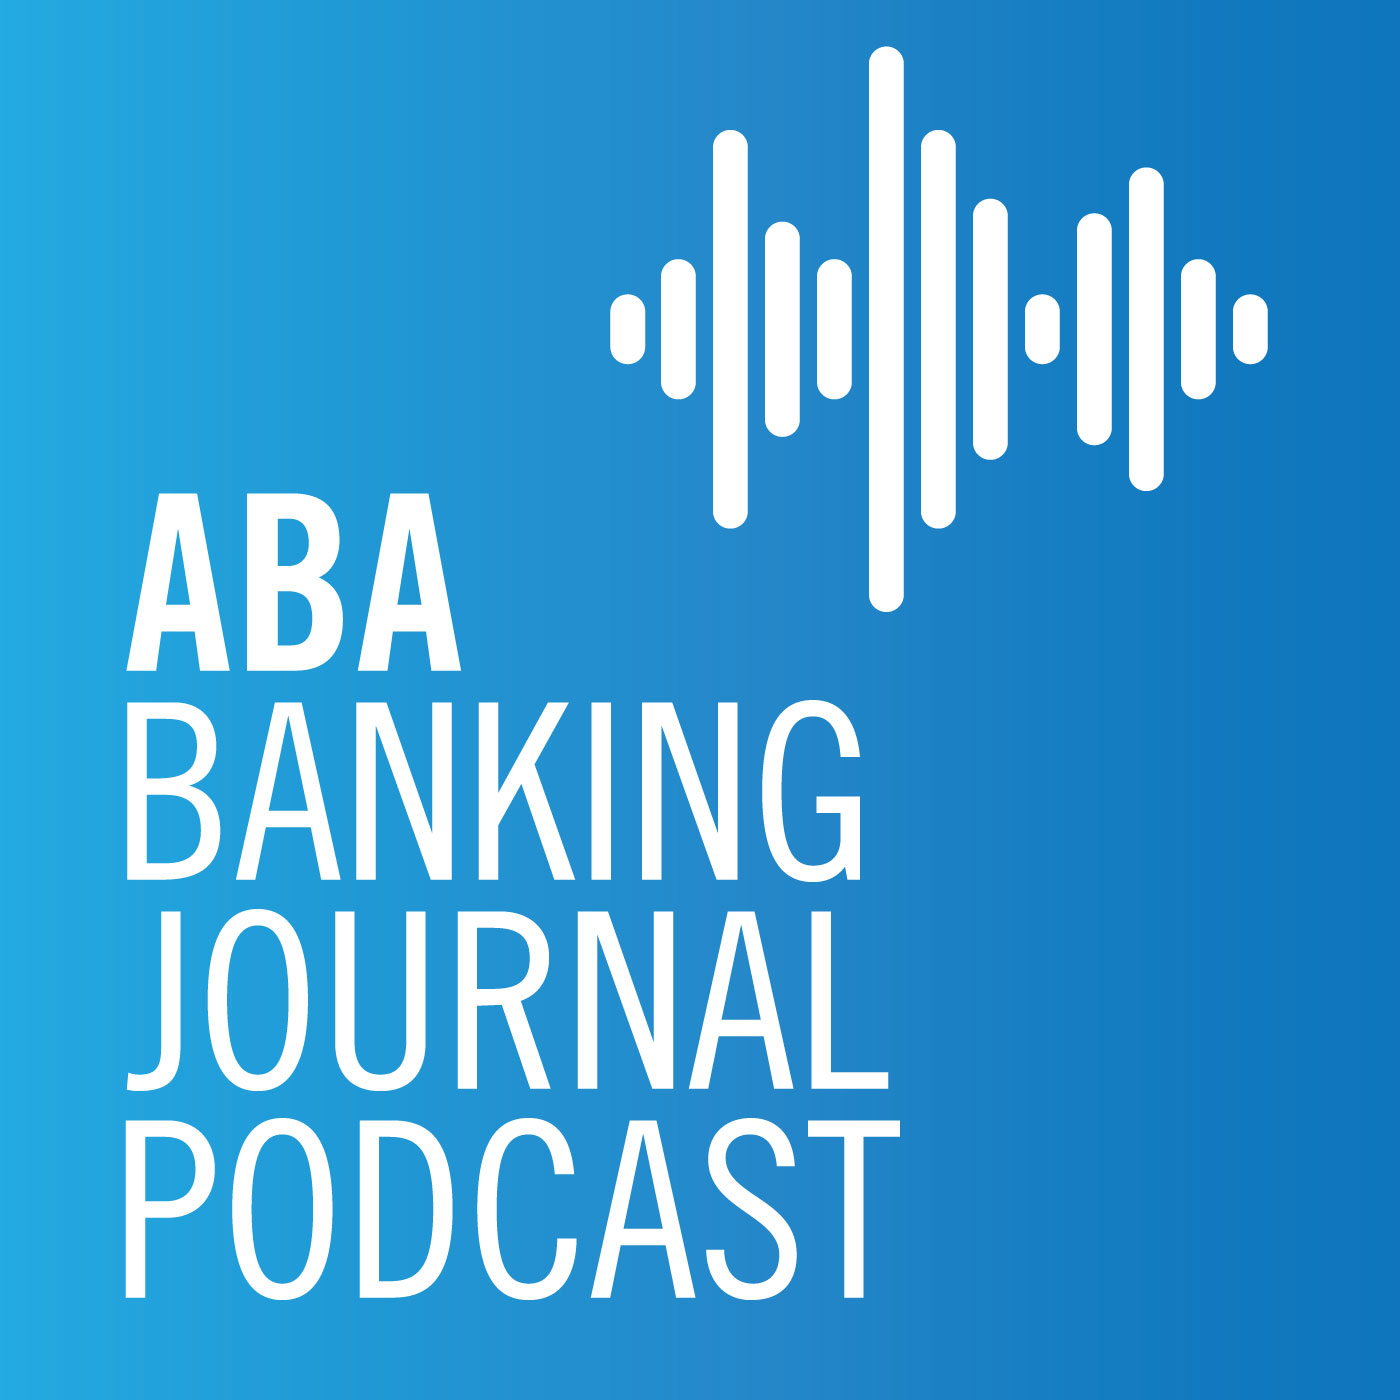 ABA Podcast Journal